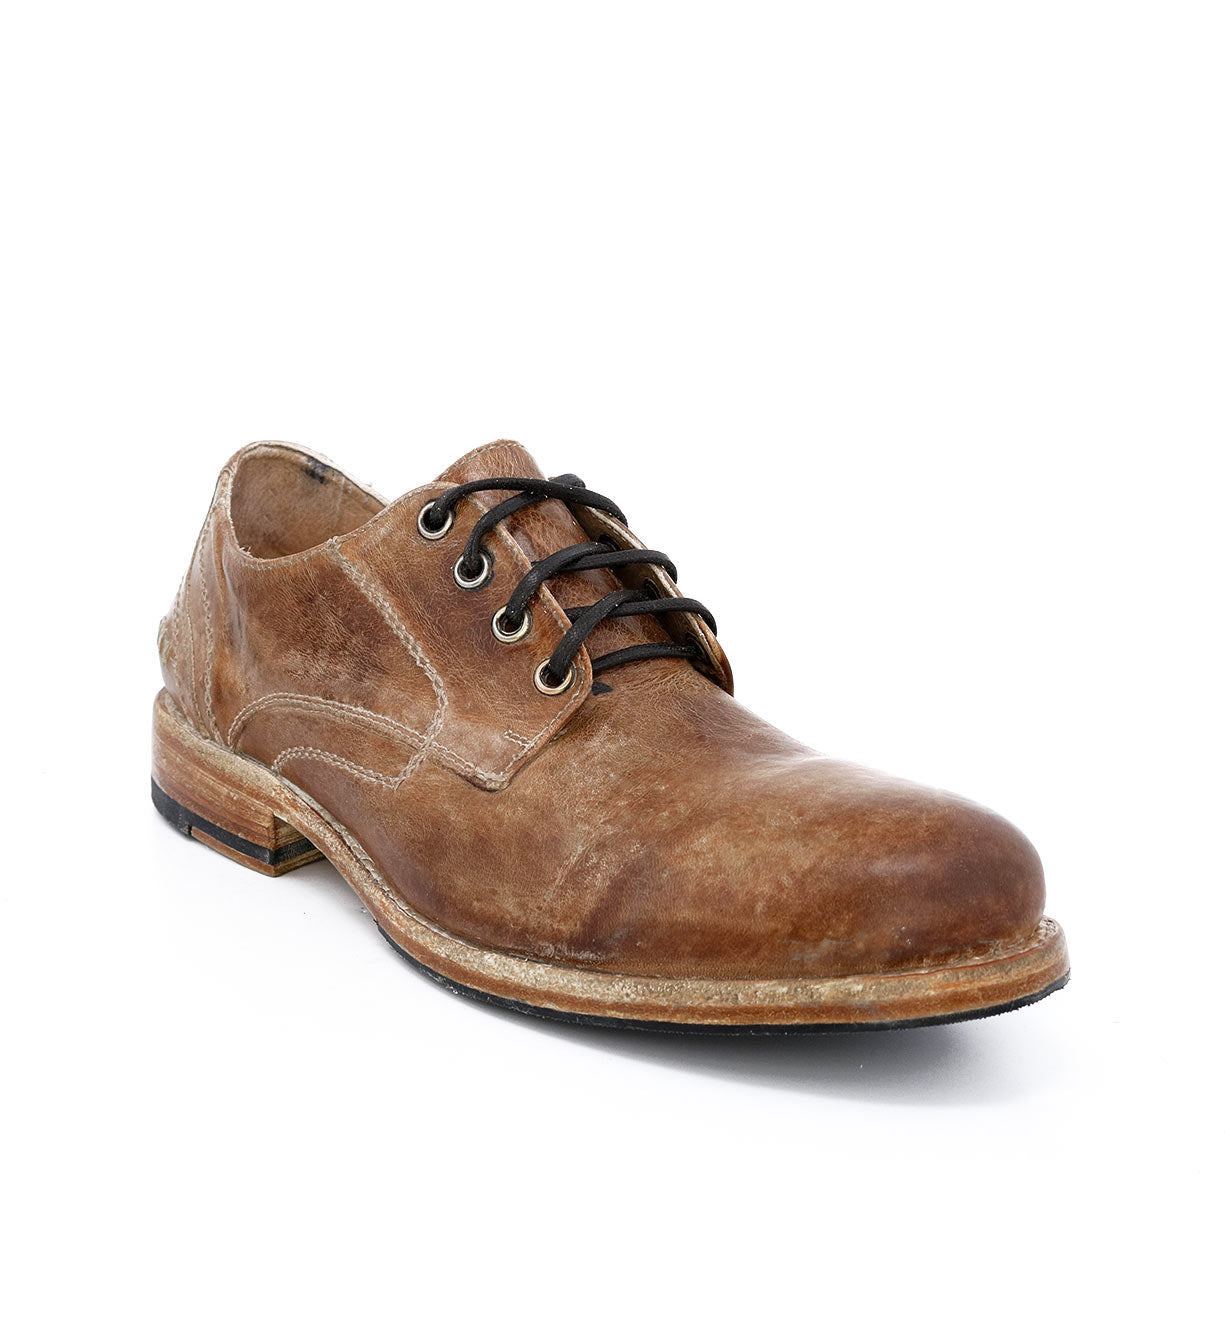 A men's brown lace up Bed Stu oxford shoe.